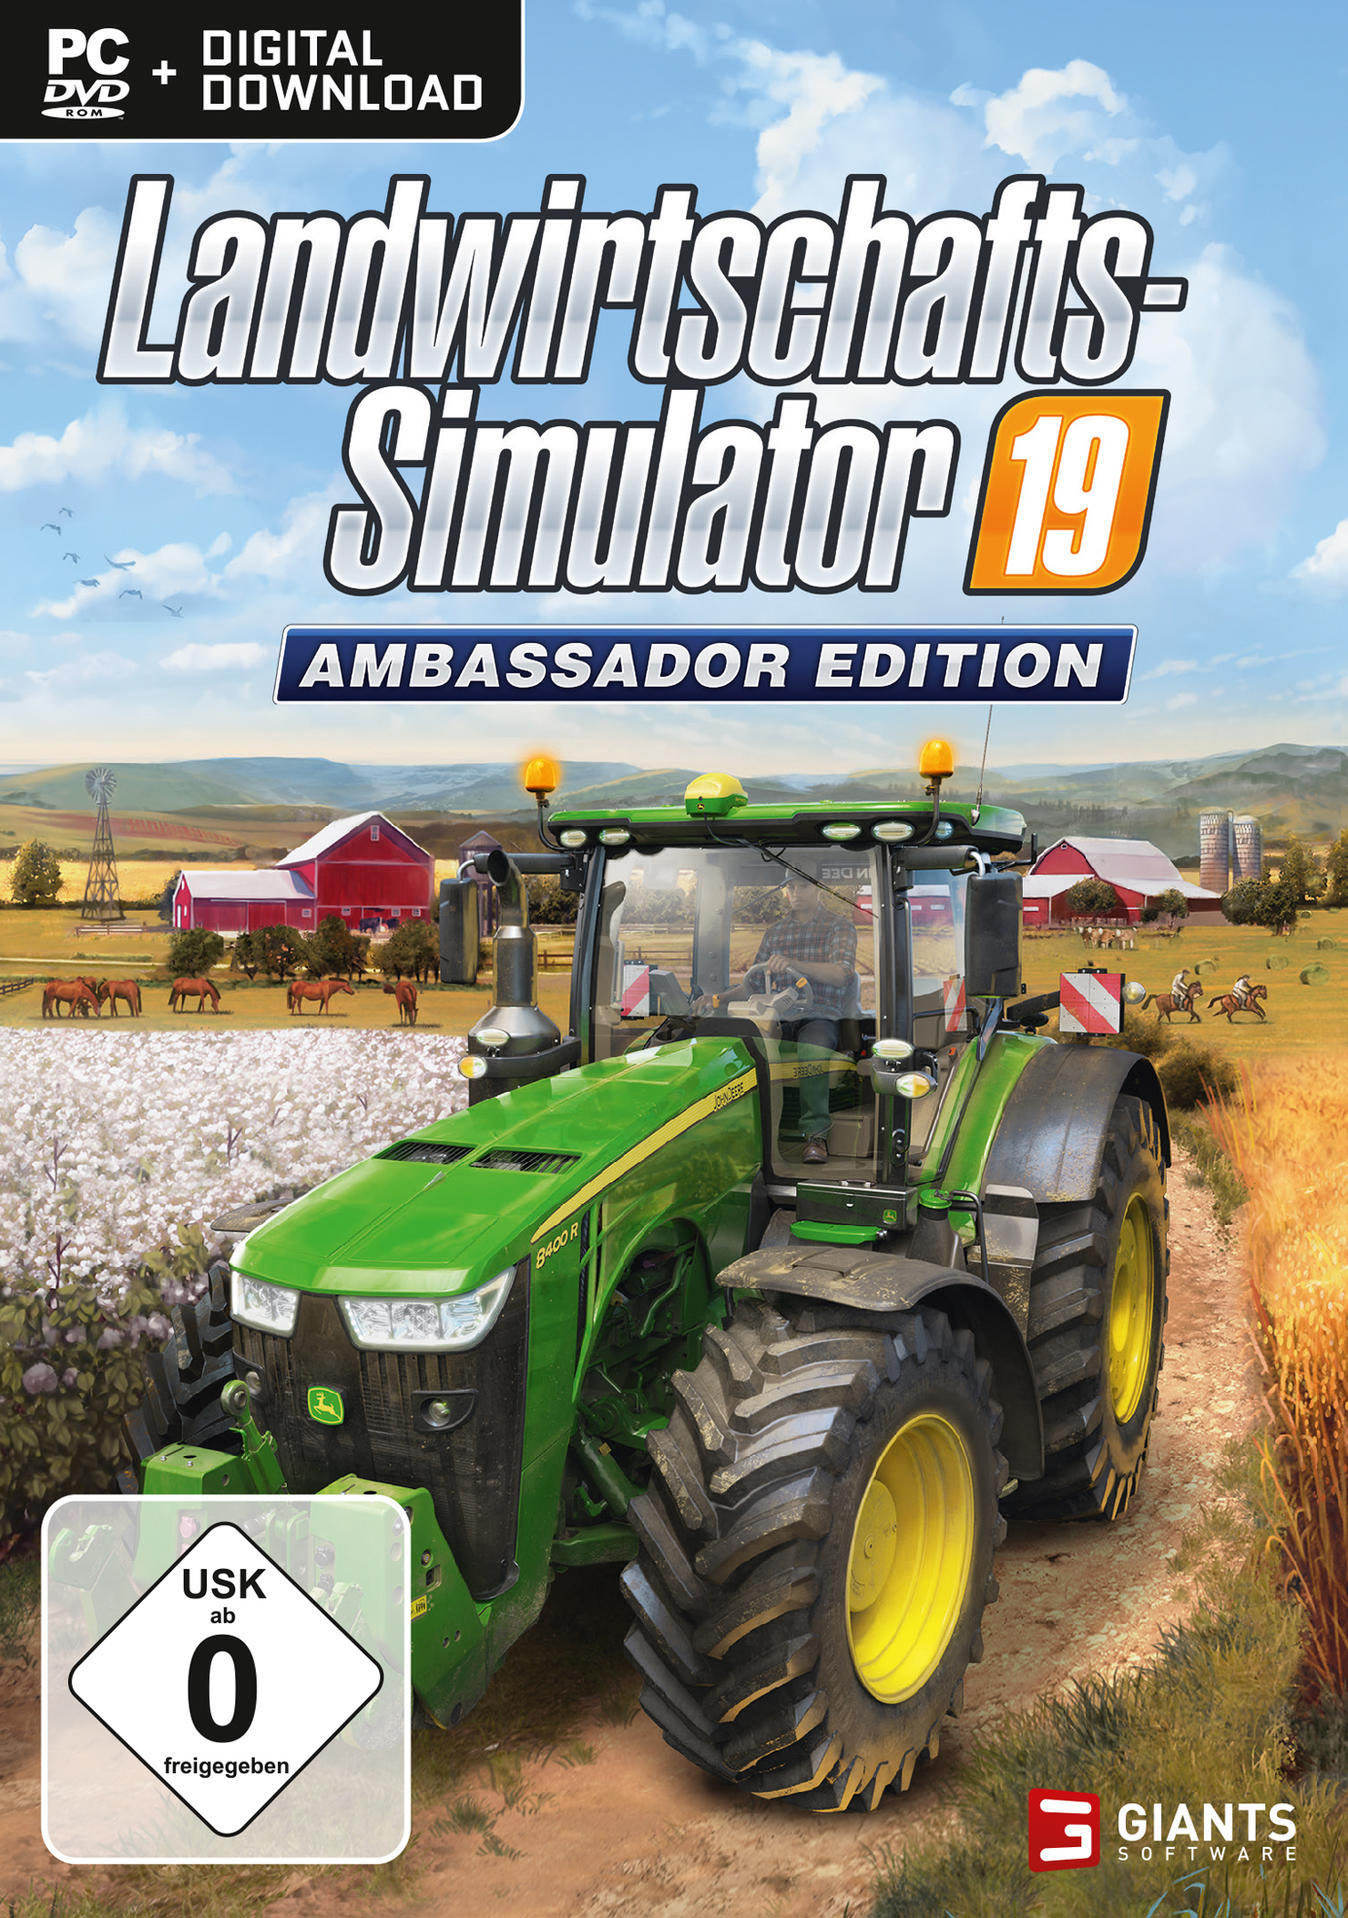 19 Edition - Ambassador [PC] Landwirtschafts-Simulator